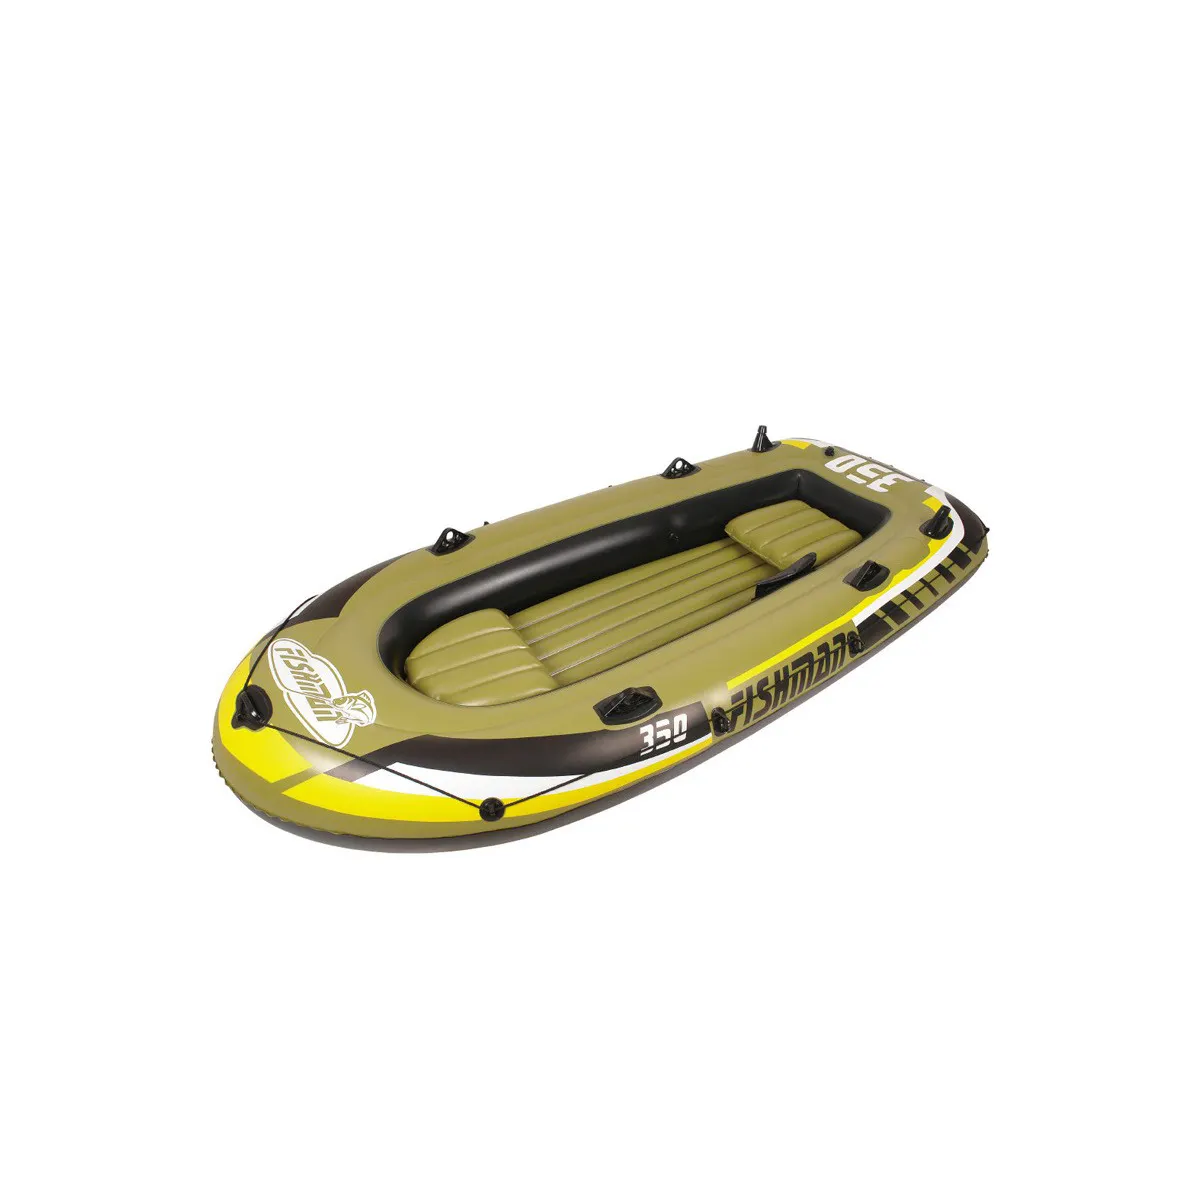 Bote inflable personalizado para deportes acuáticos, Kayak, PVC